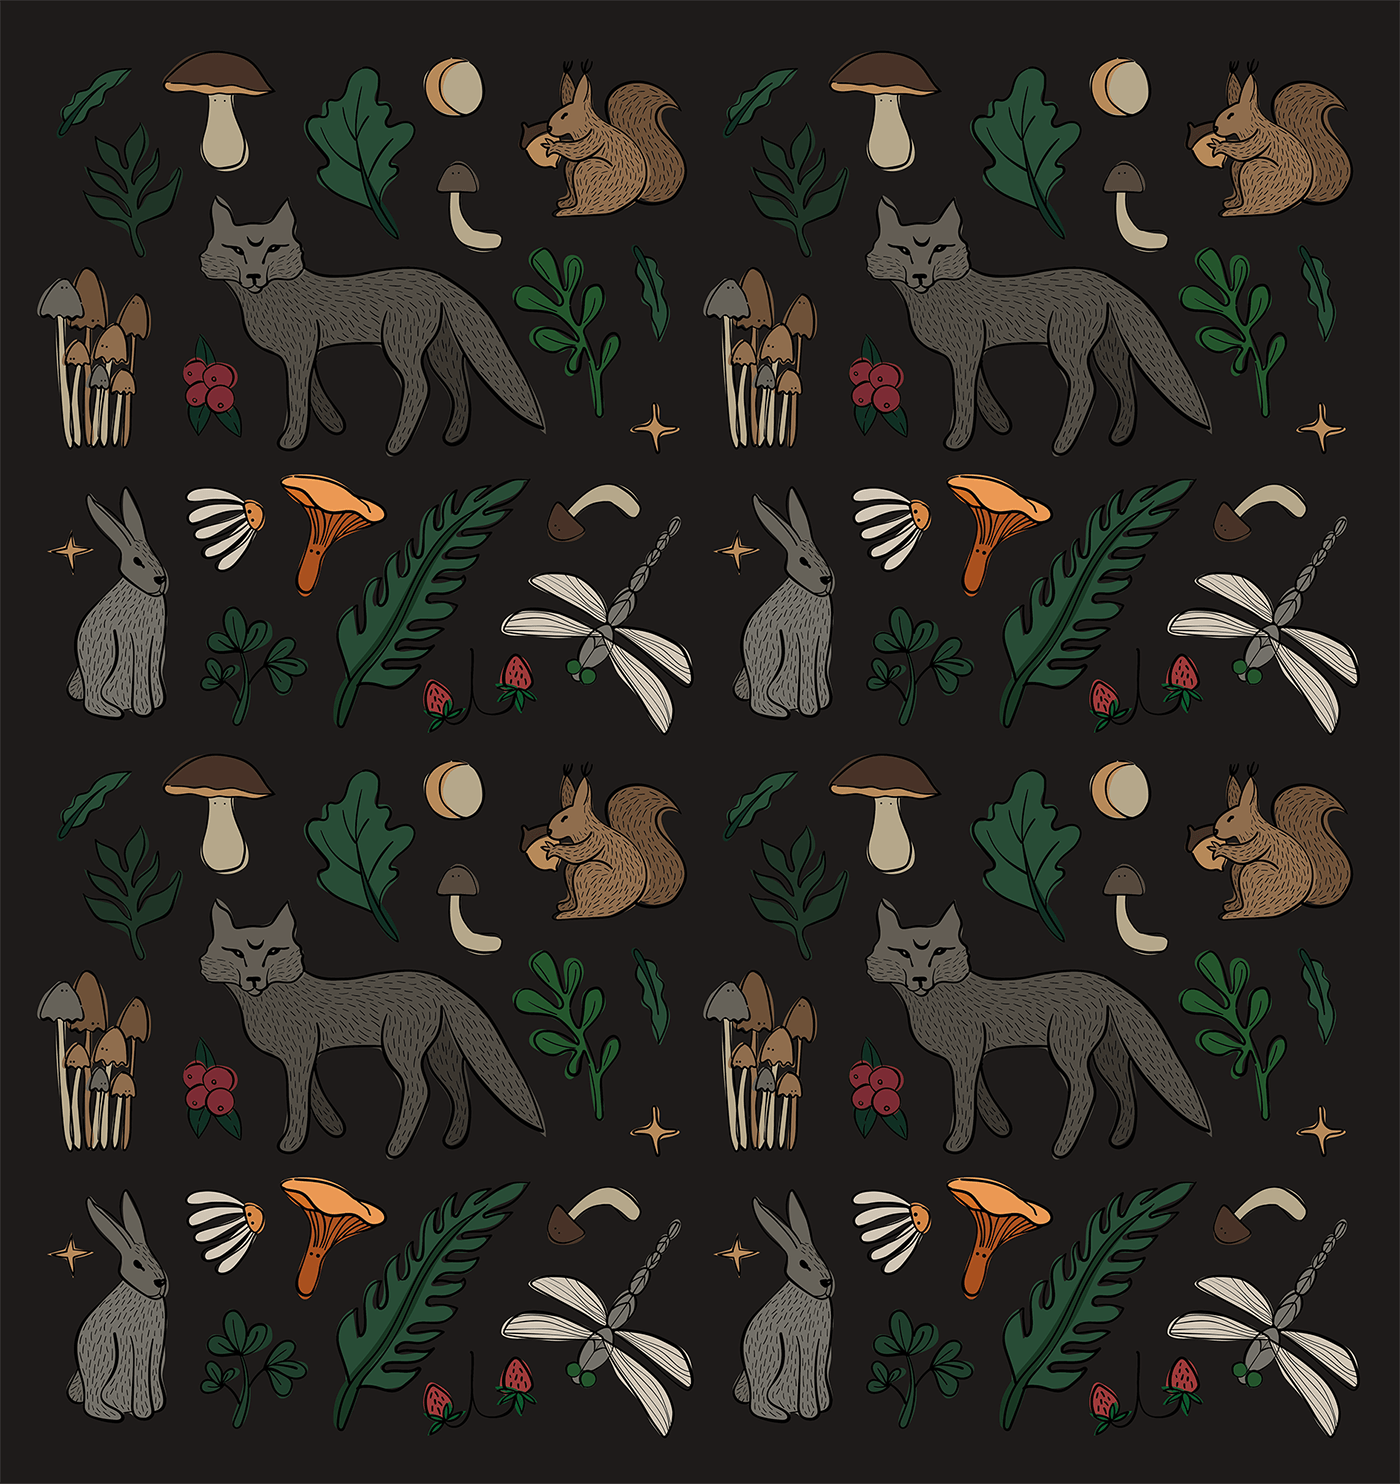 ILLUSTRATION  Character design  forest animals pattern design  Wallpaper design forest pattern